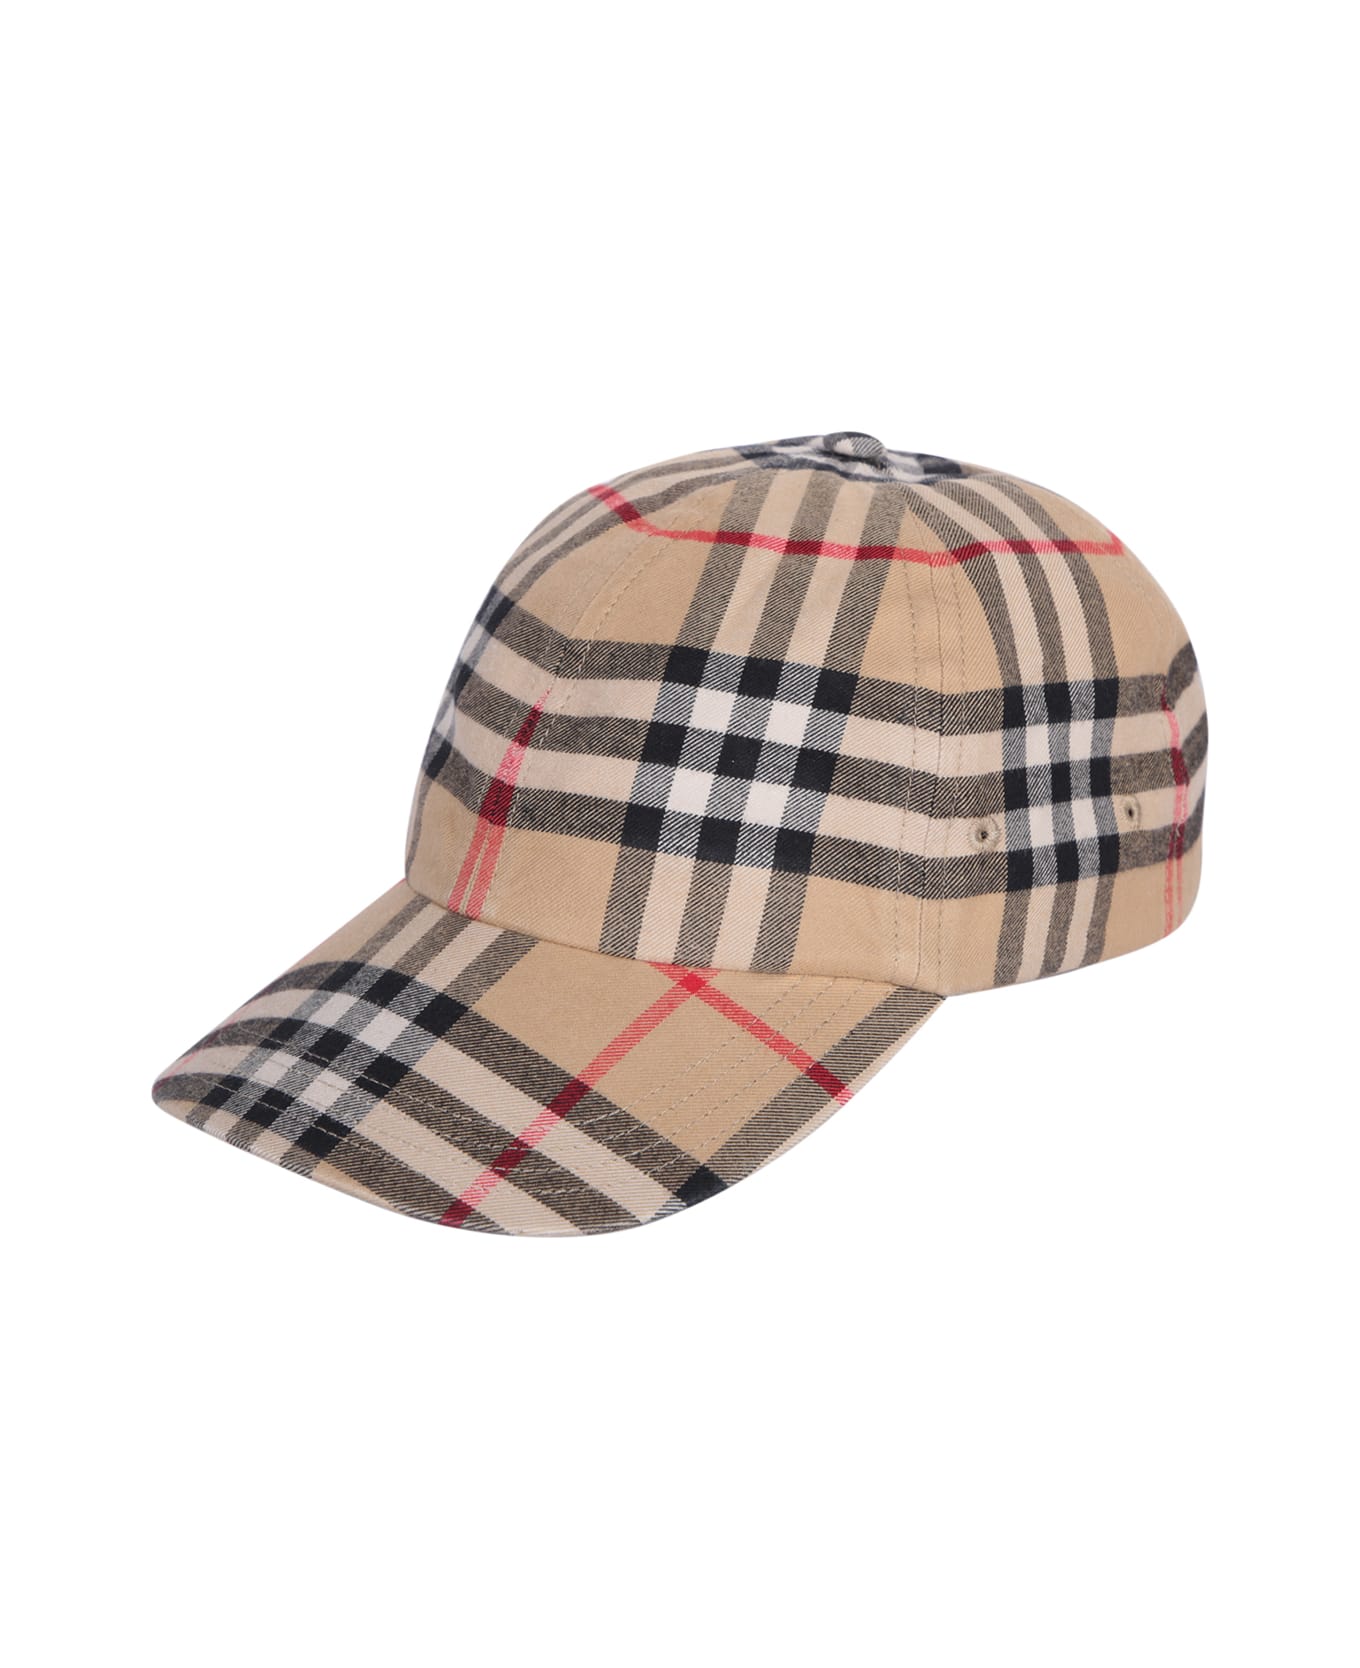 Burberry Check Cap - Archive Beige 帽子